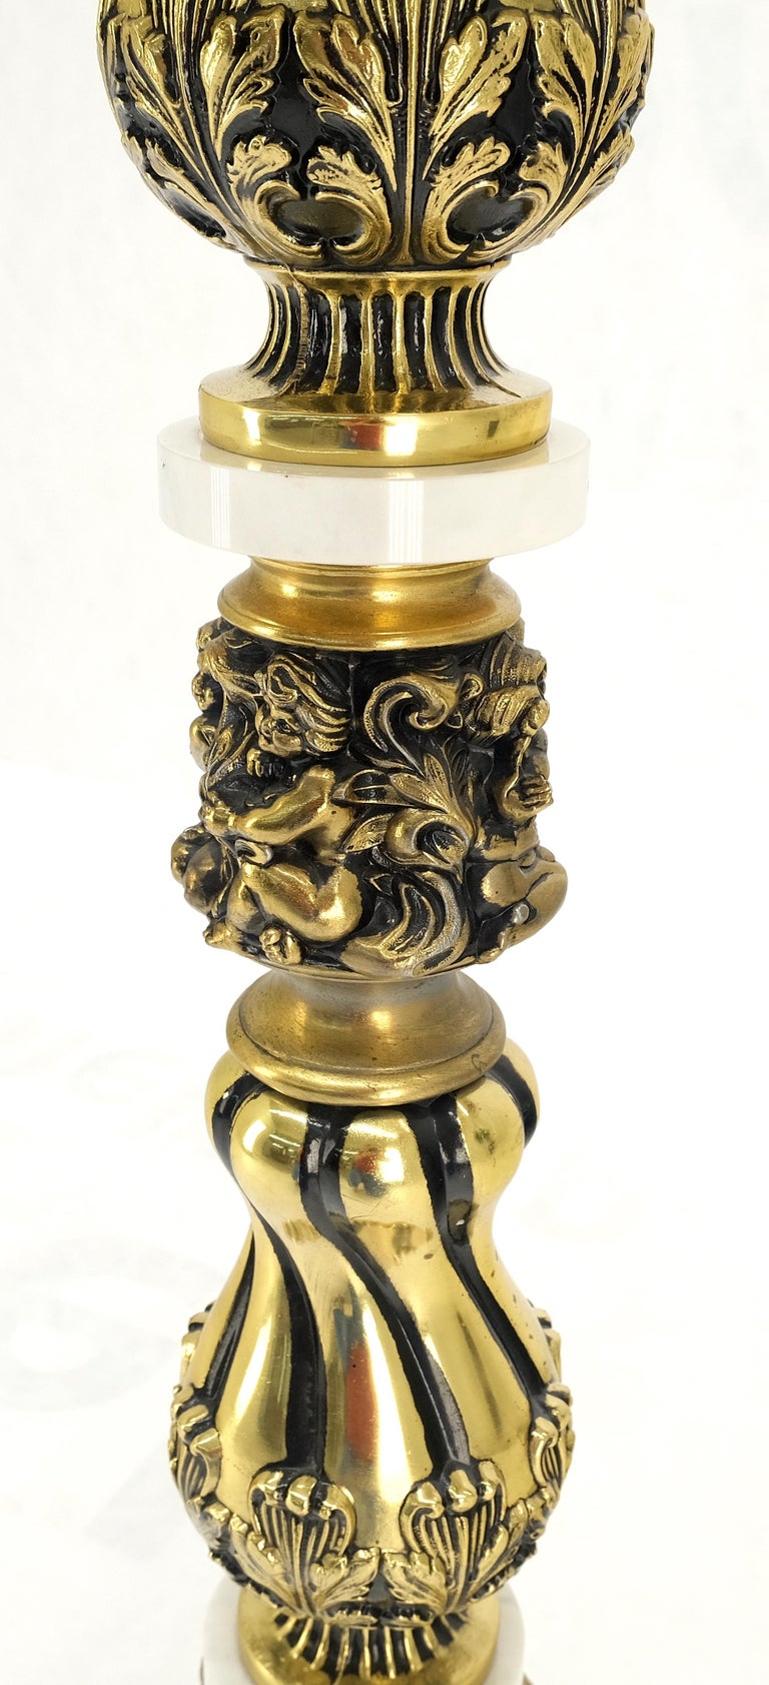 Brass & Marble Decorative Ornate Round Pedestal Stand Mint!